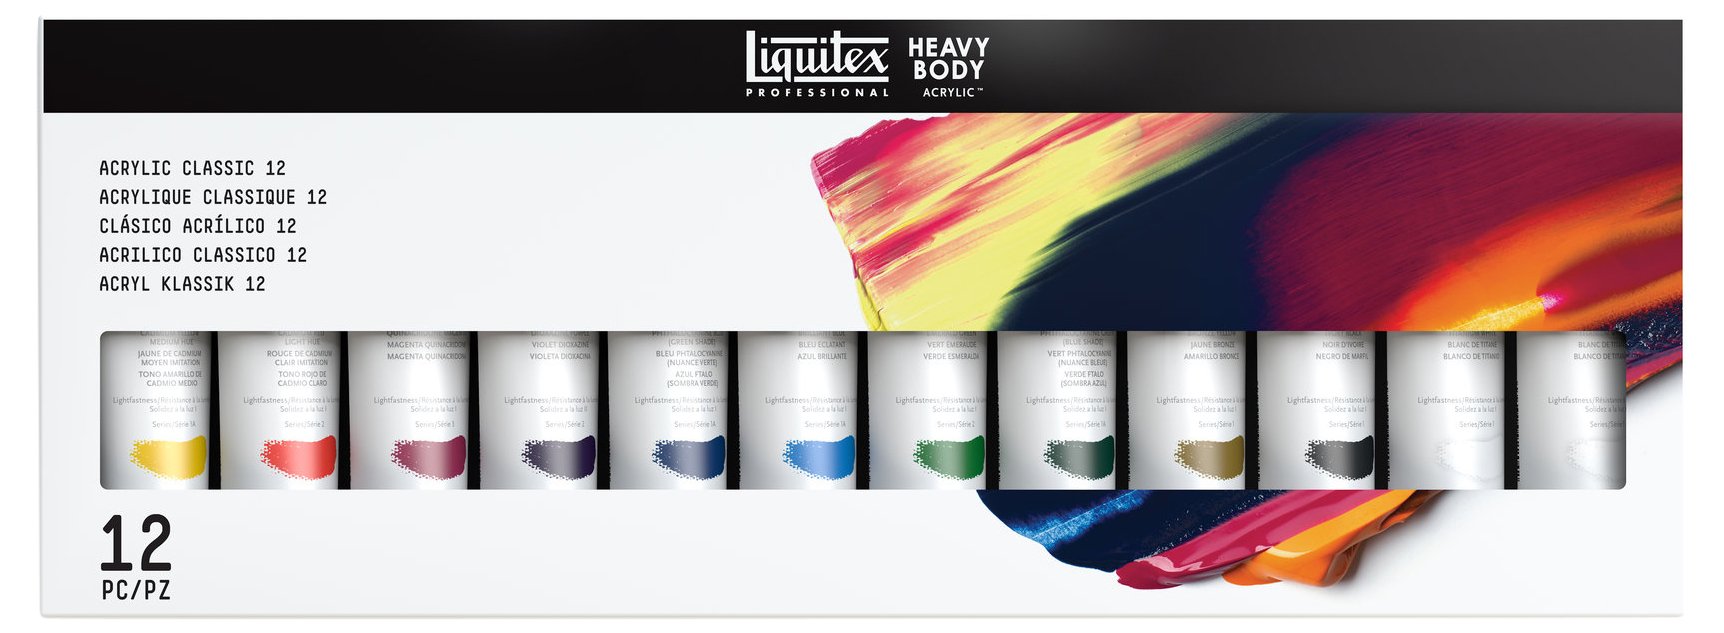 Liquitex Heavy Body Acrylic 2oz Medium Magenta